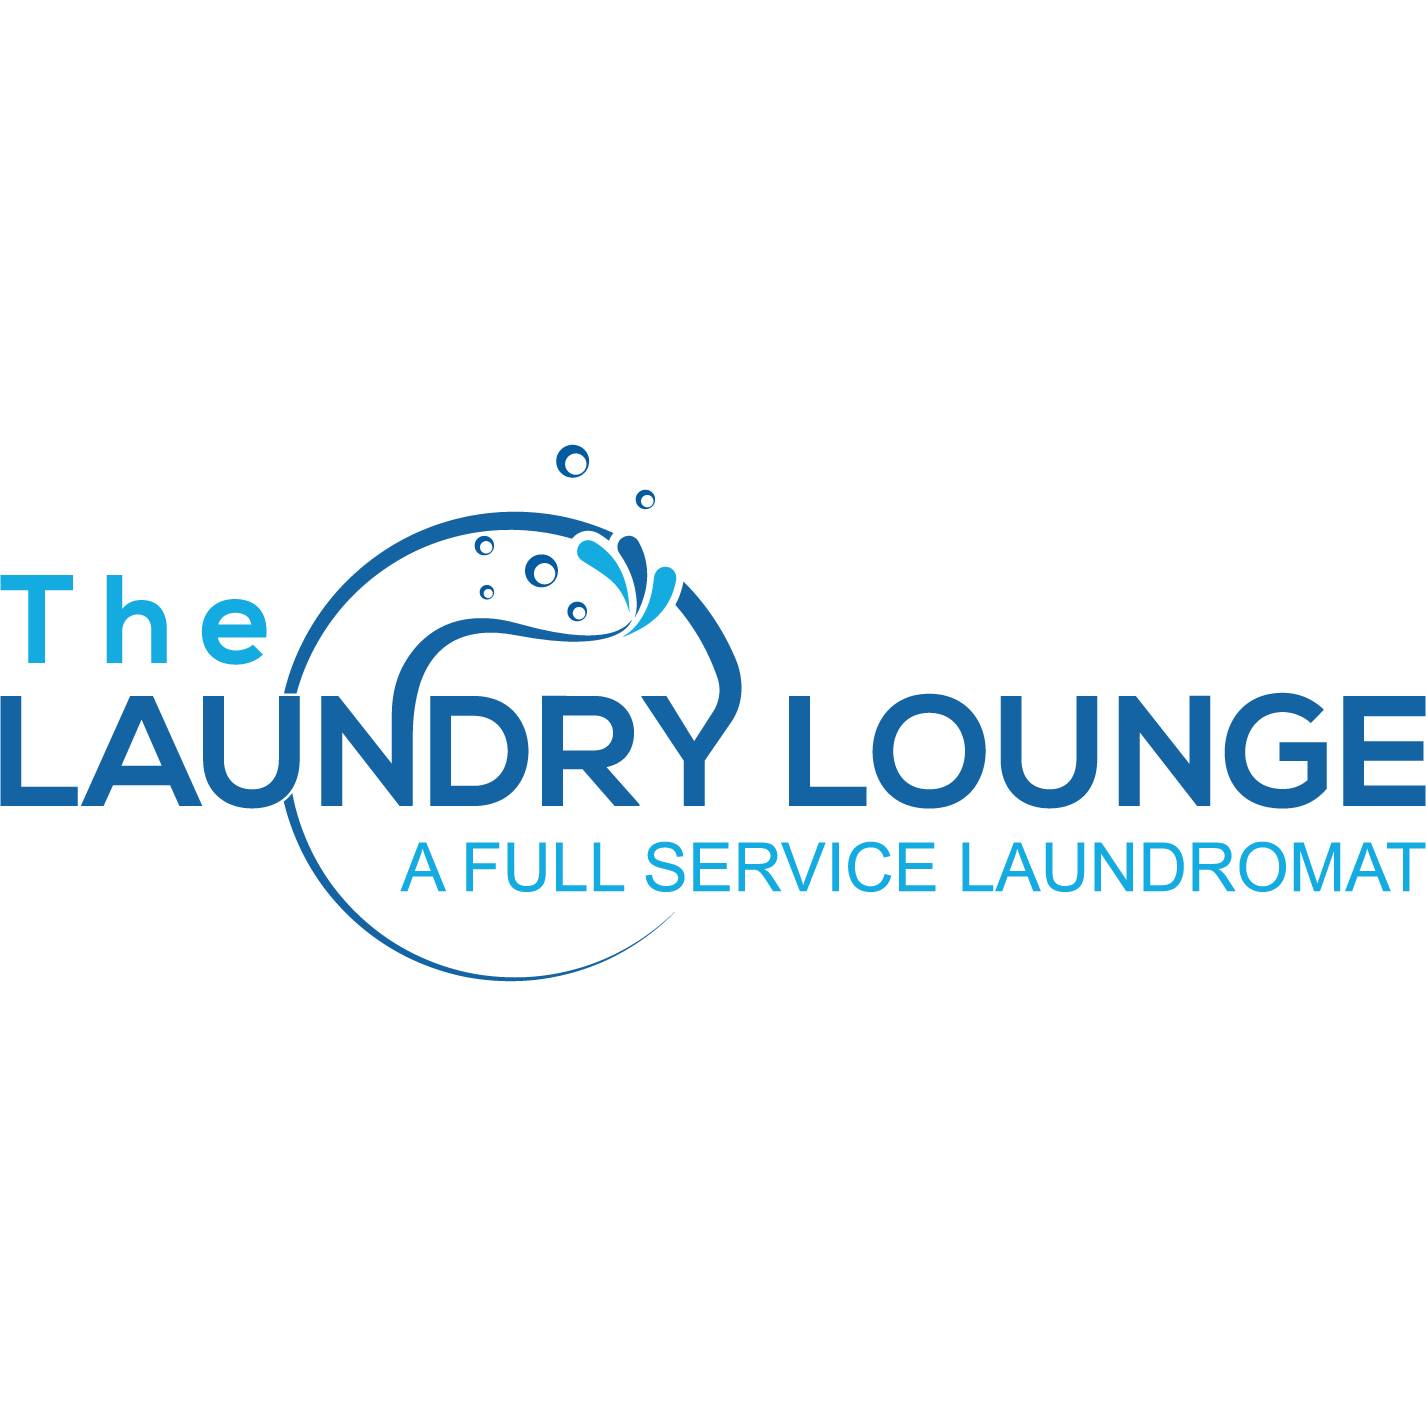 The Laundry Lounge - Atlanta, GA 30324 - (404)876-3517 | ShowMeLocal.com